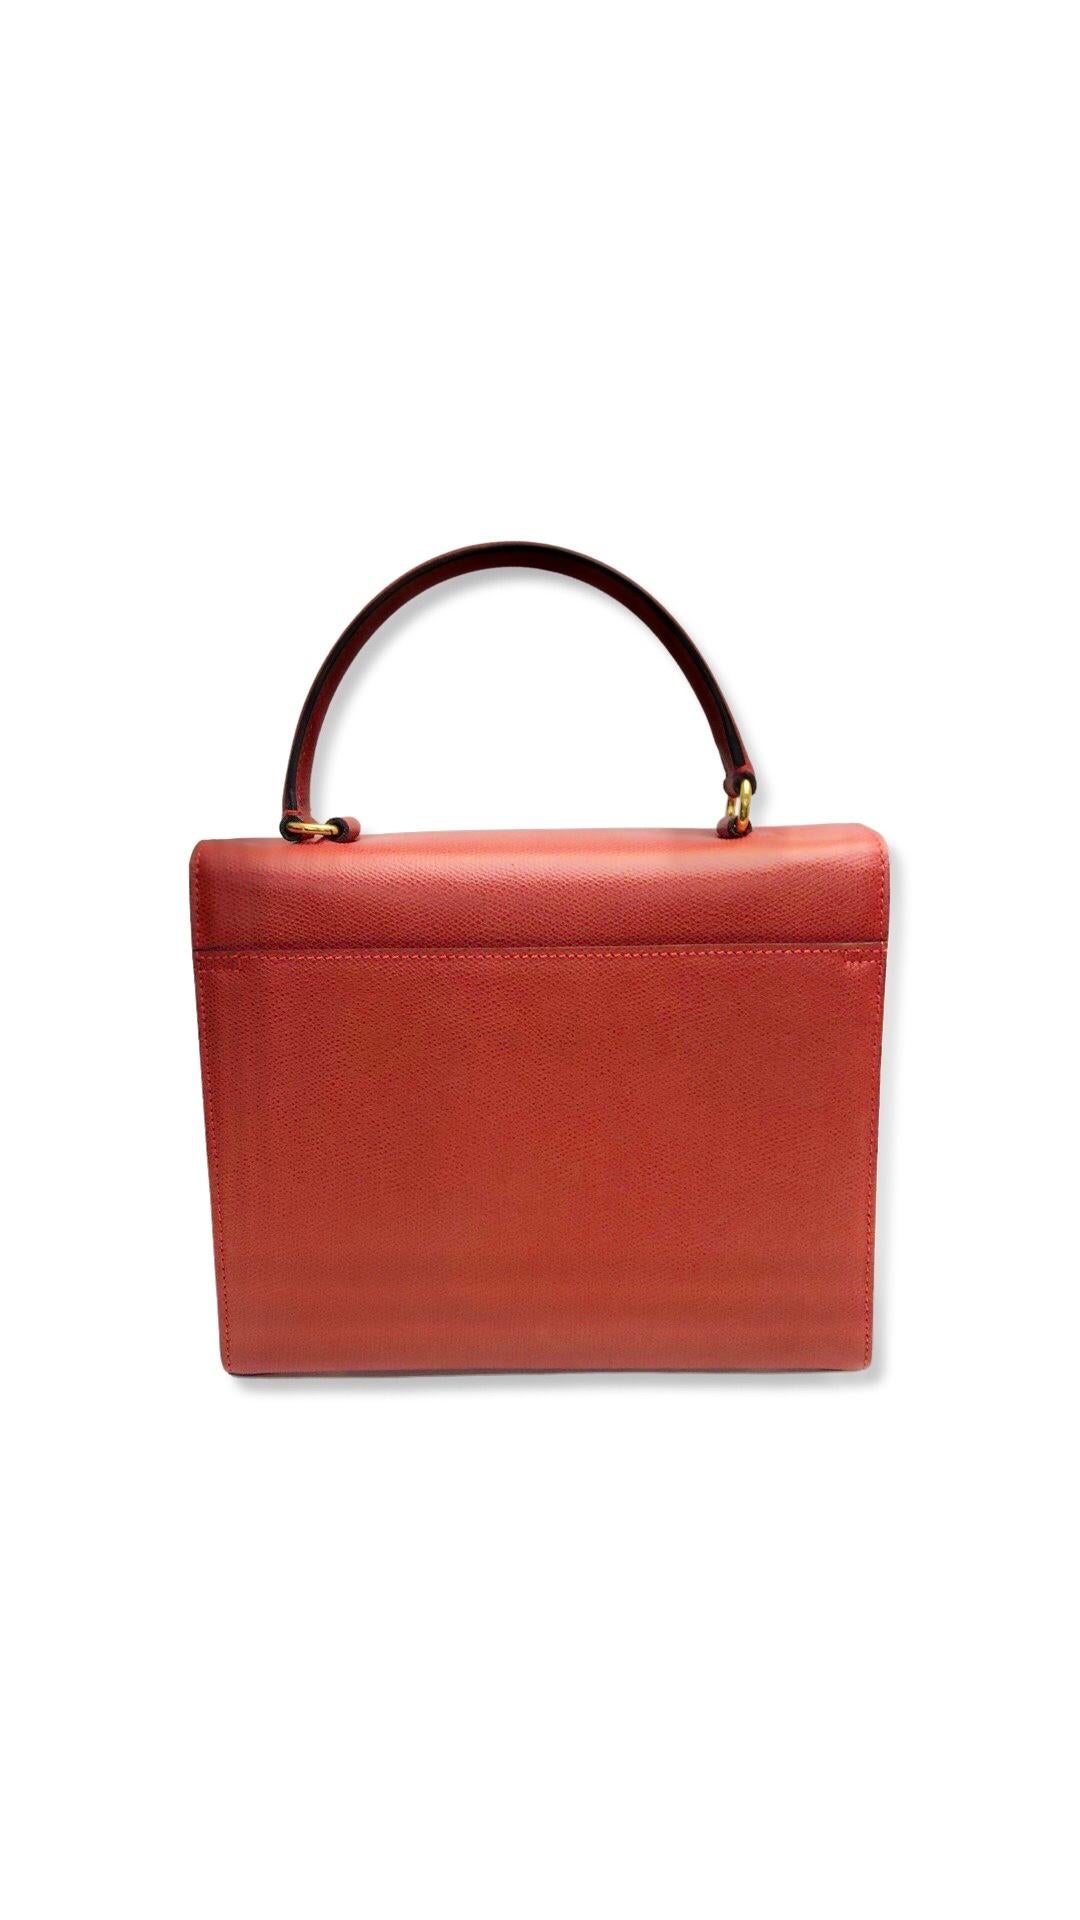 red box purse